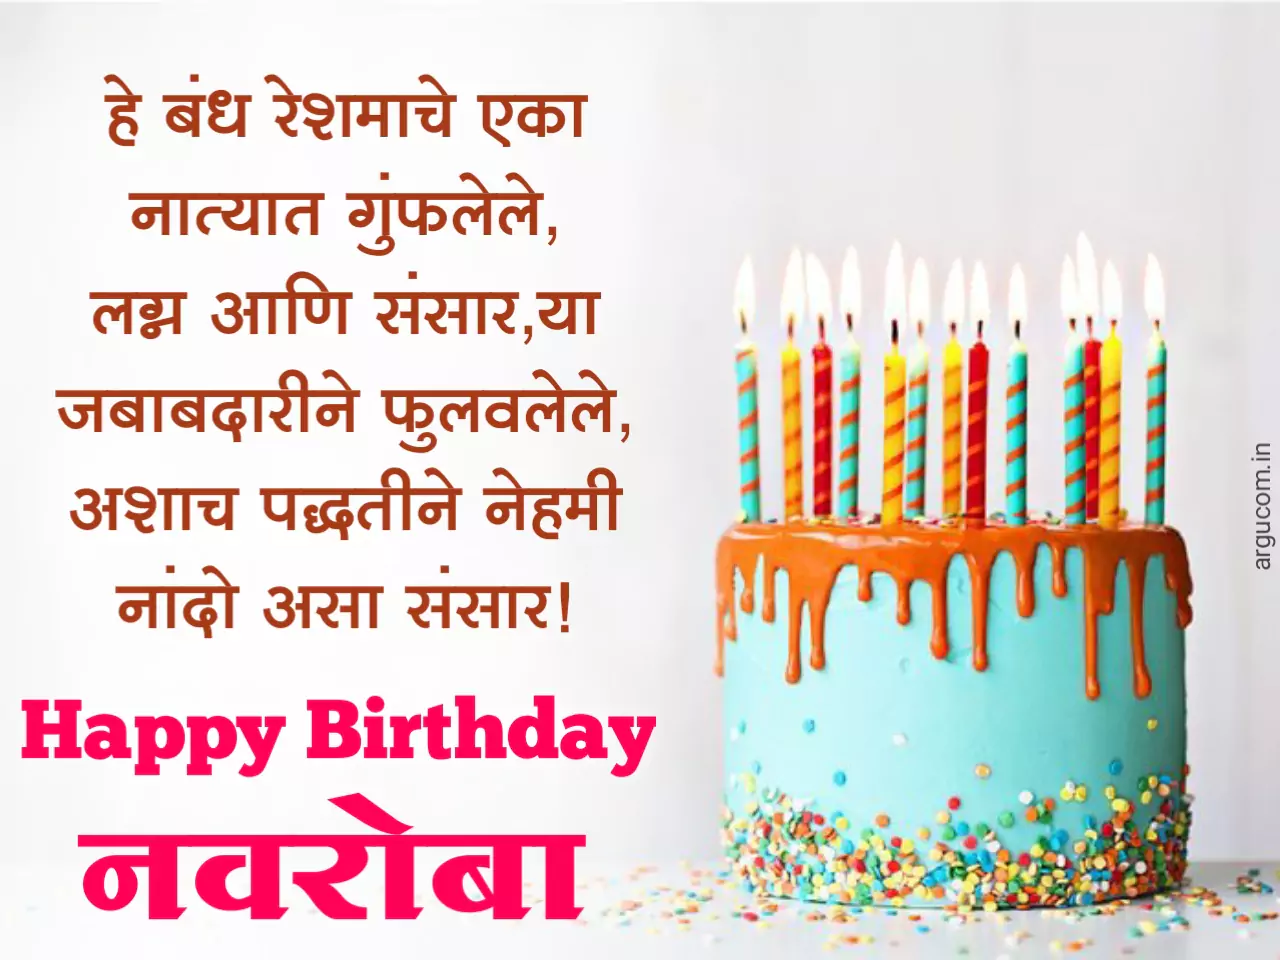 Happy Birthday wishes for husband in marathi